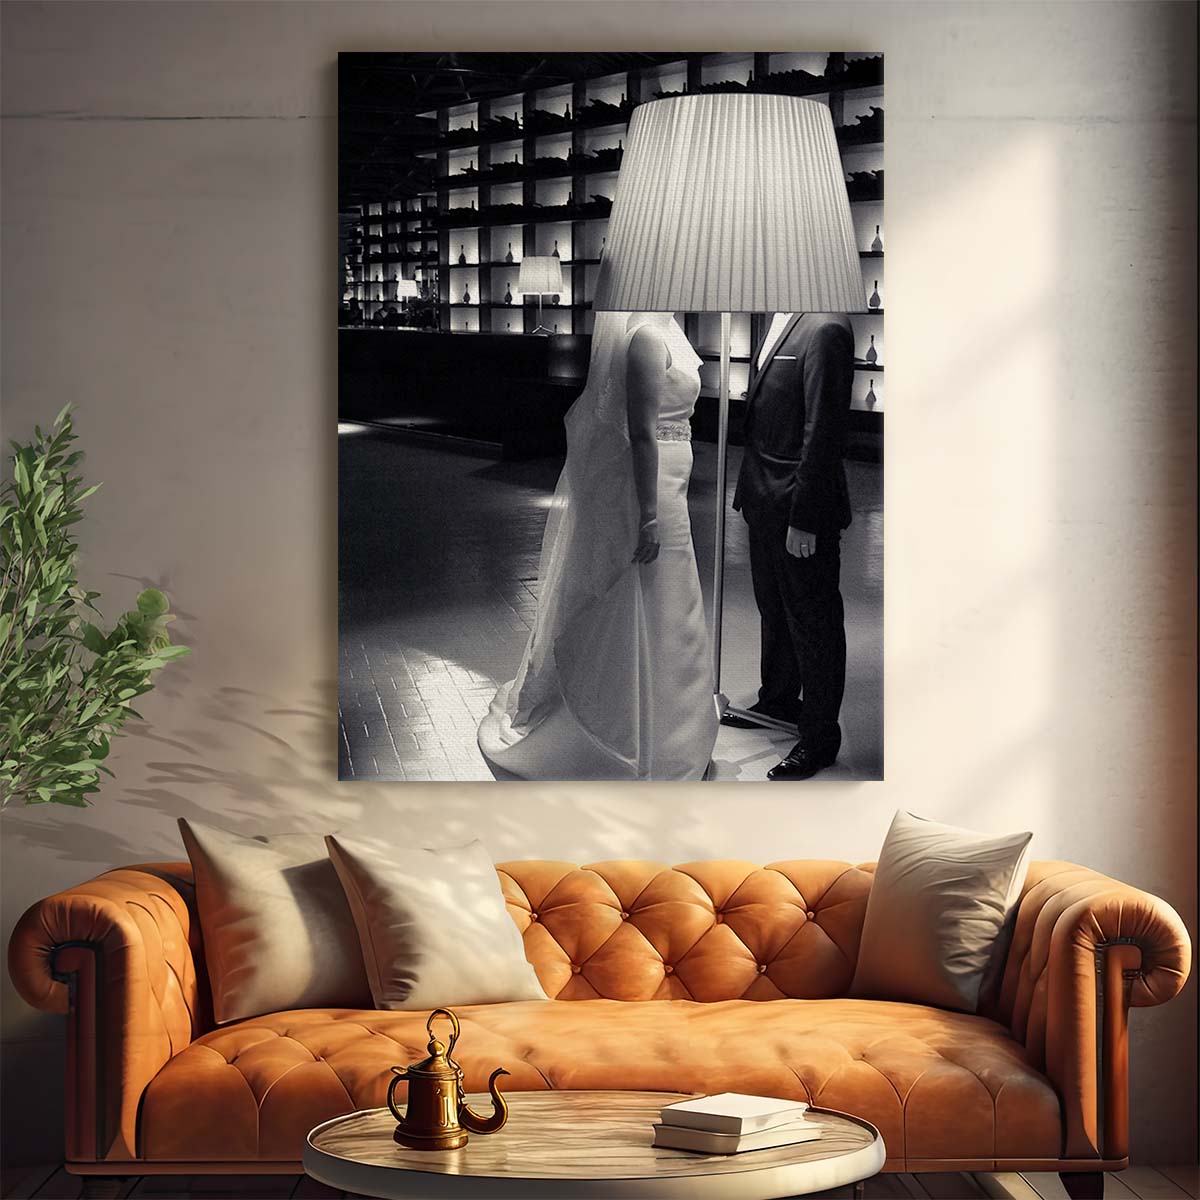 Monochrome Wedding Photography Art Bride & Groom Portrait by Luxuriance Designs, made in USA